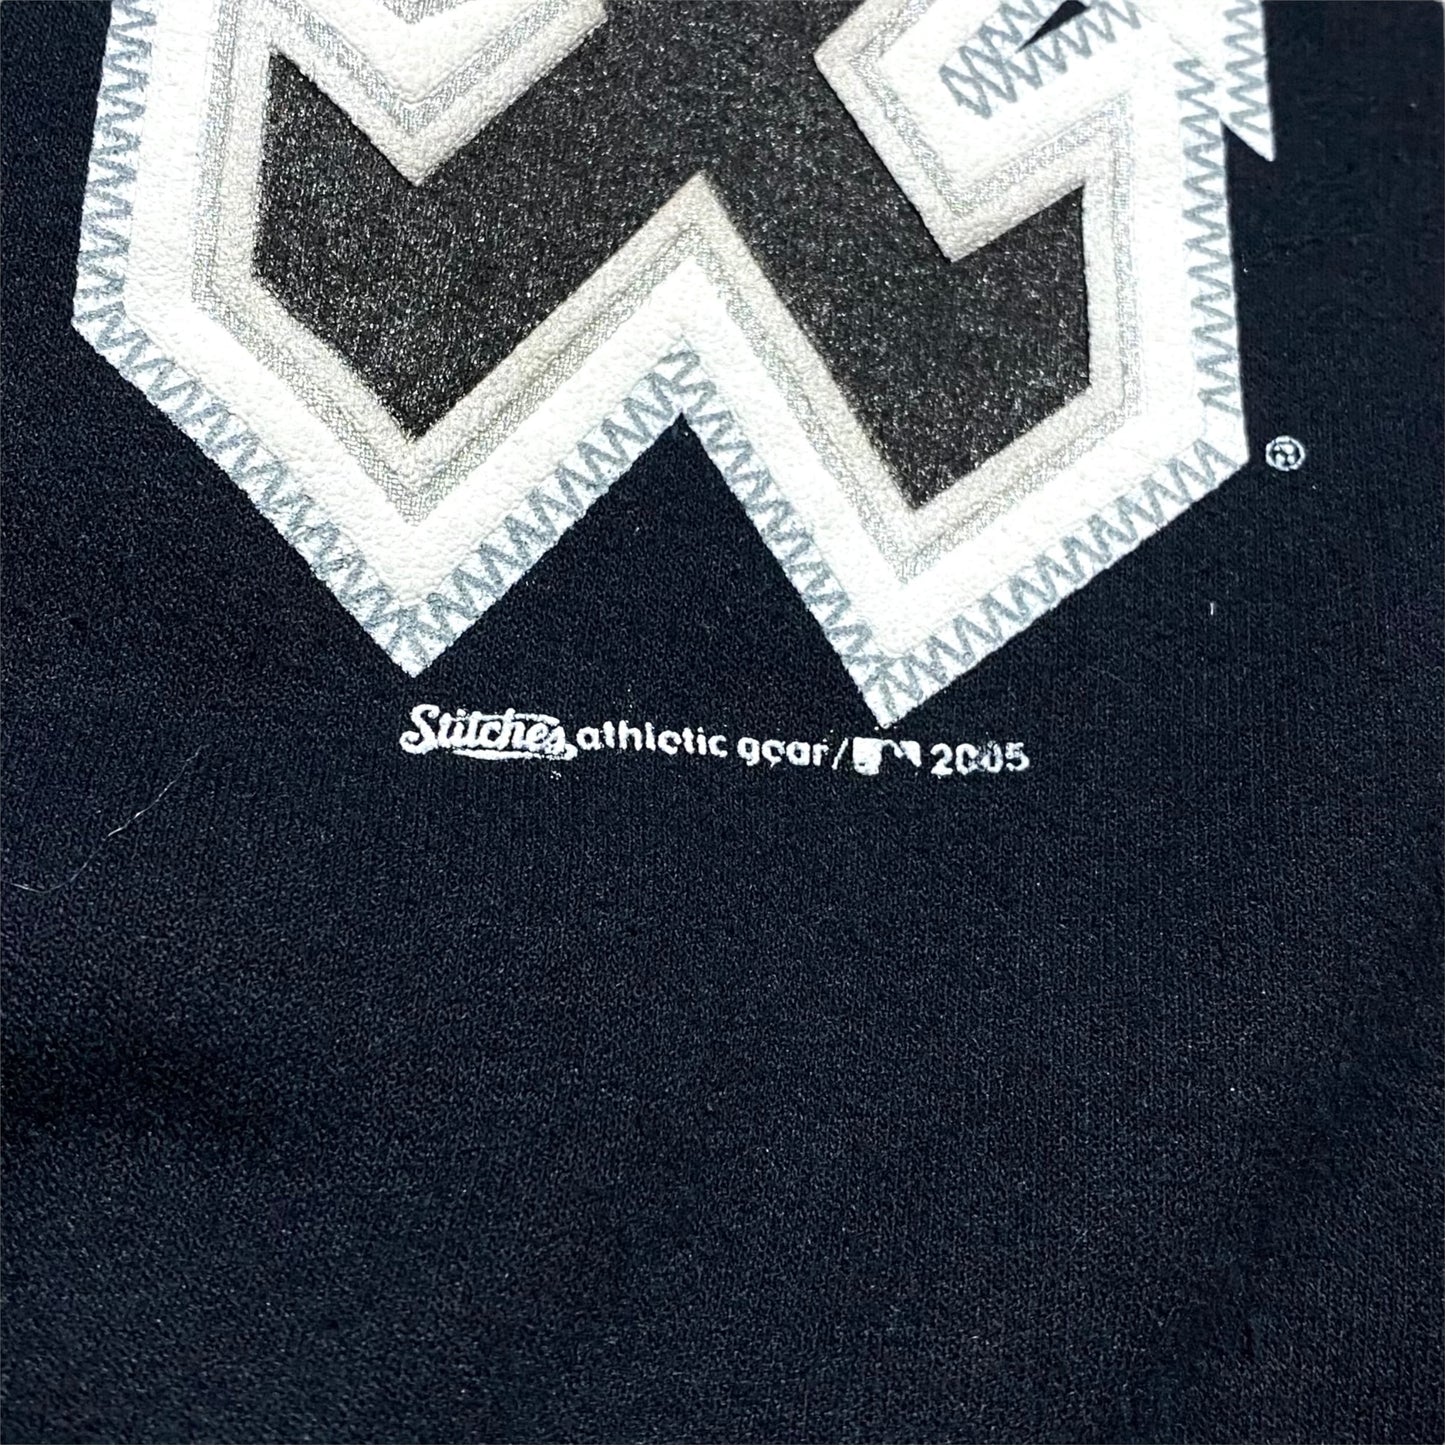 00's "Chicago Whitesox" Team hoodie